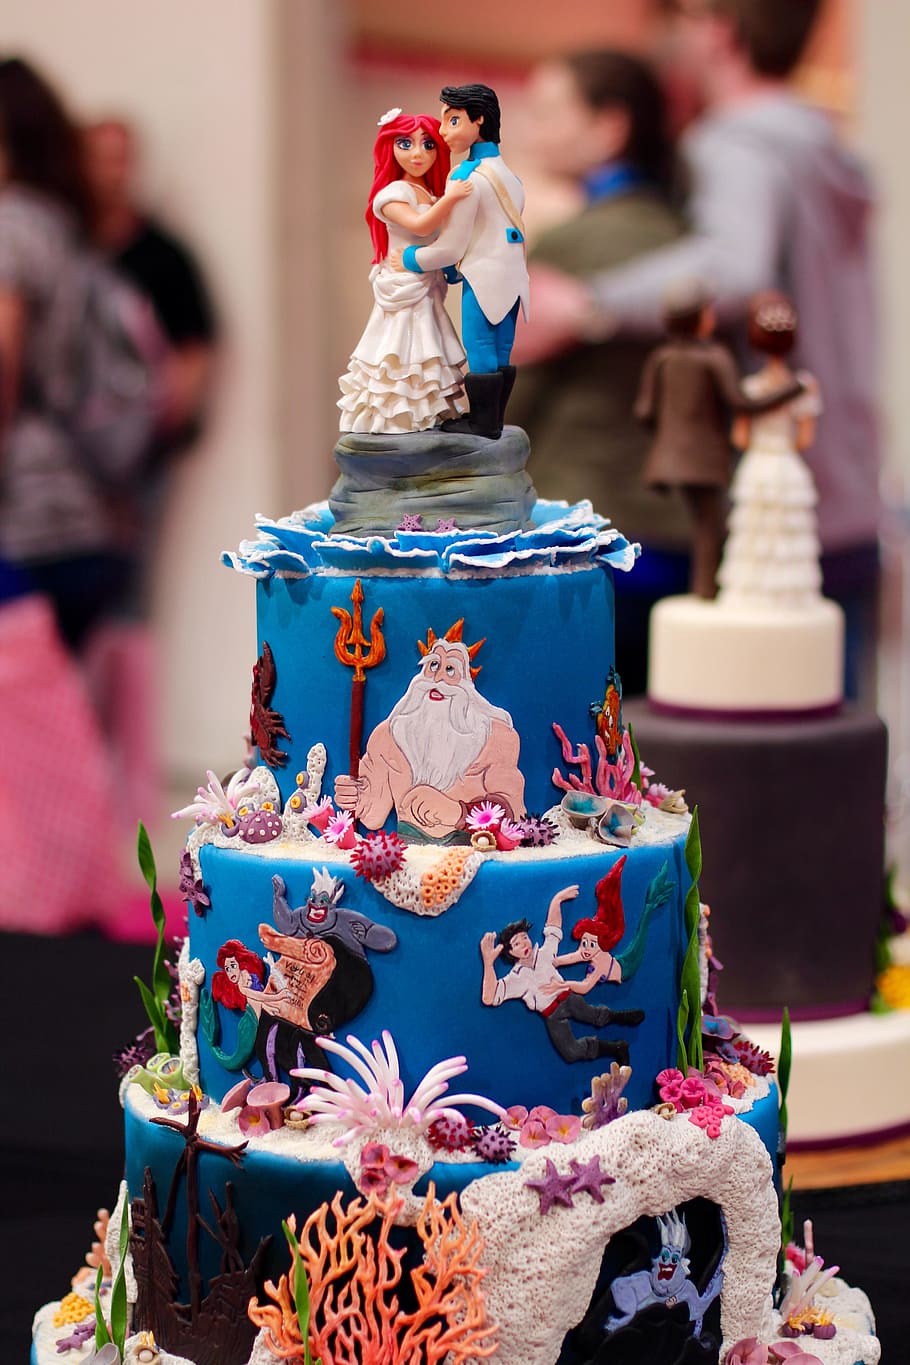 disney mermaid, themed, cake, arielle, mermaid, decorated, model, figures, caricature, wedding